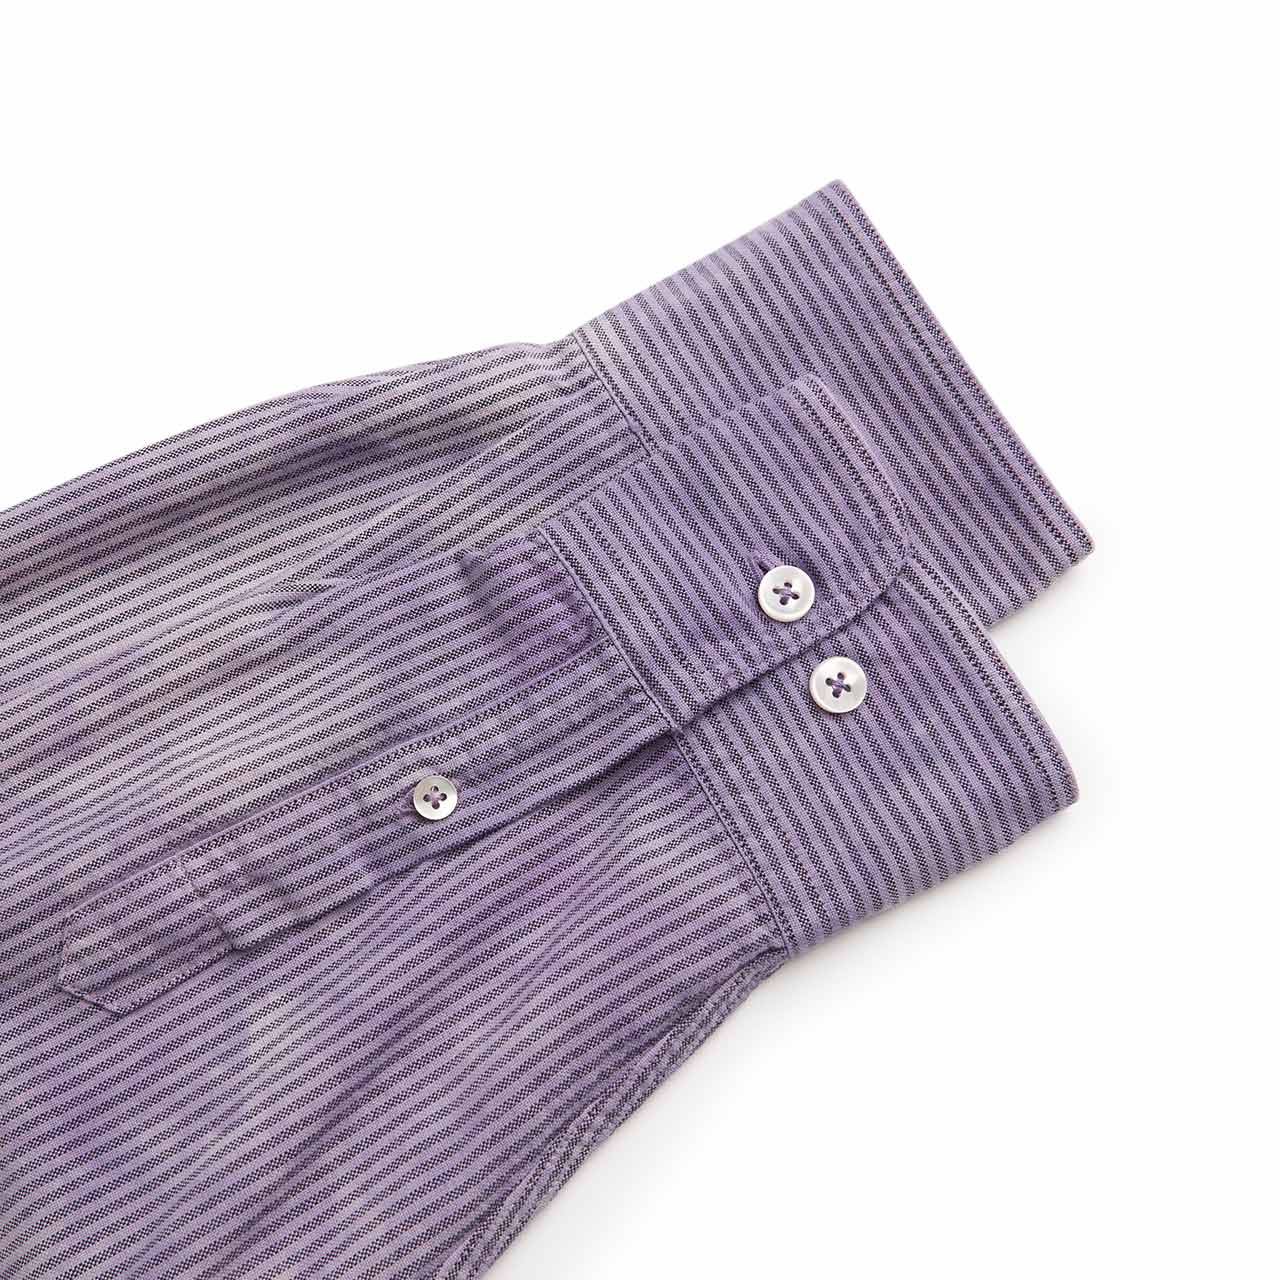 aries od oxford stripe shirt (purple)